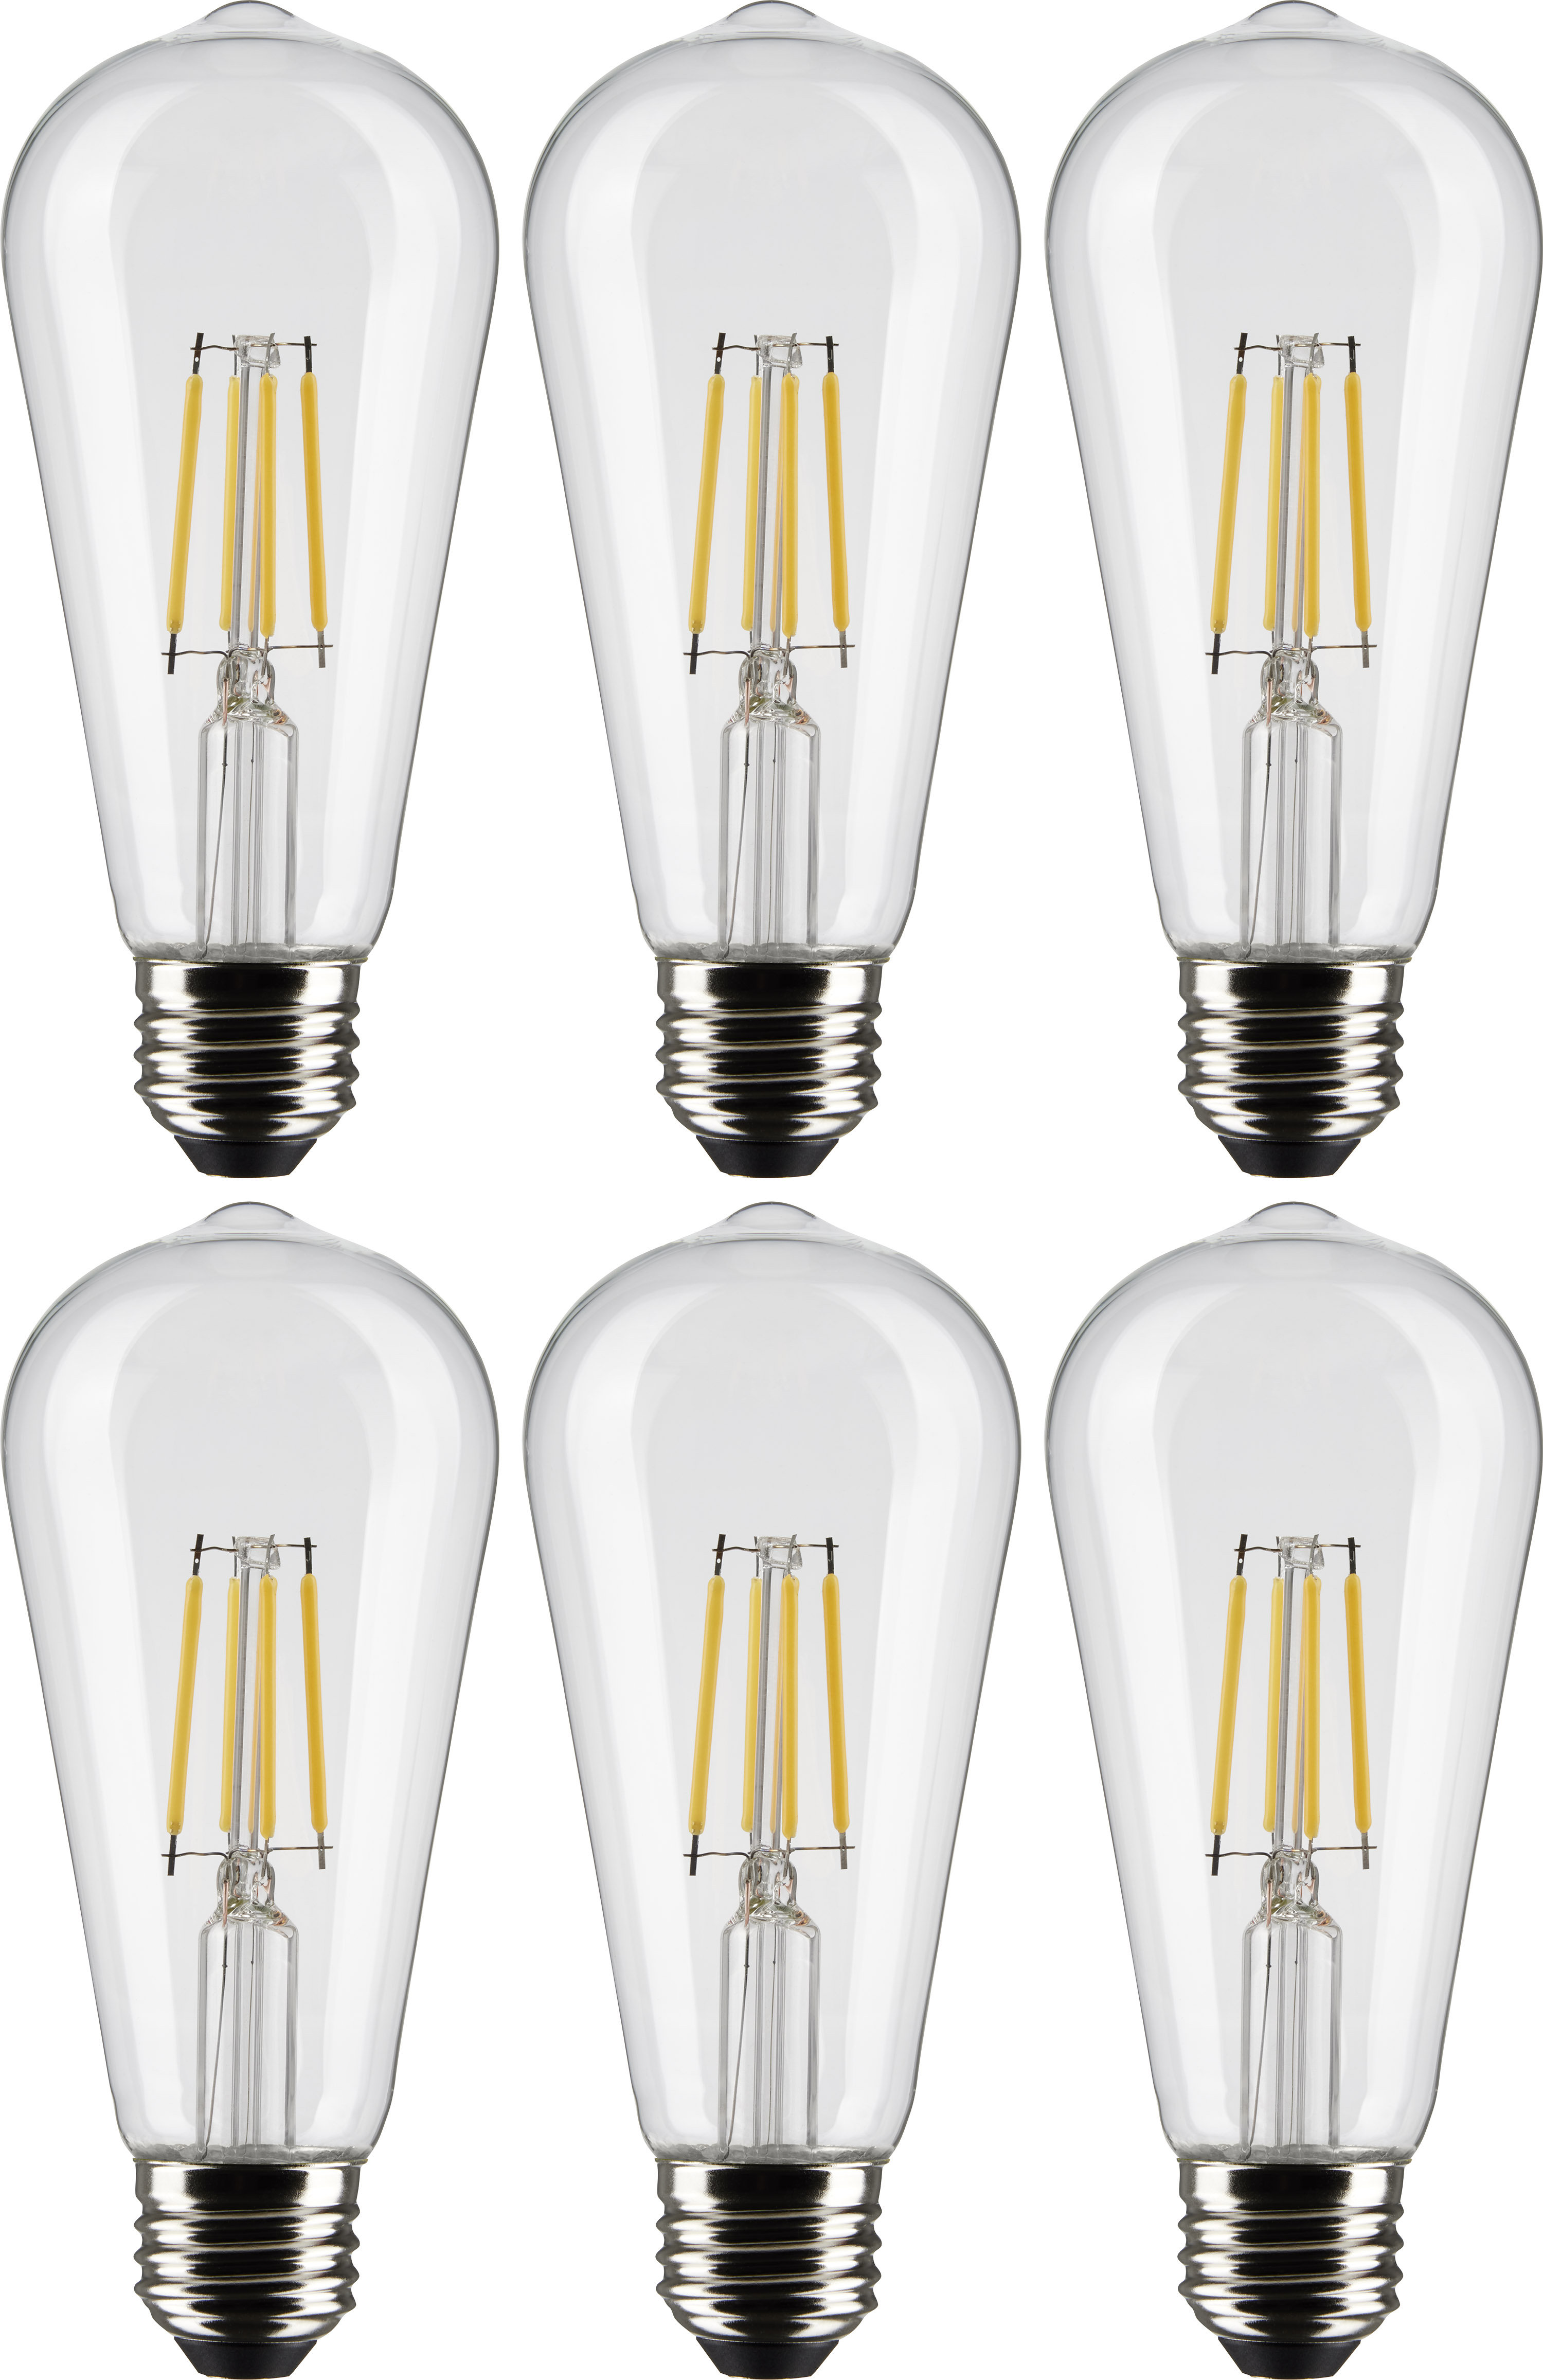 Newhouse Lighting 50-Watt Equivalent G9 Dimmable LED Light Bulb